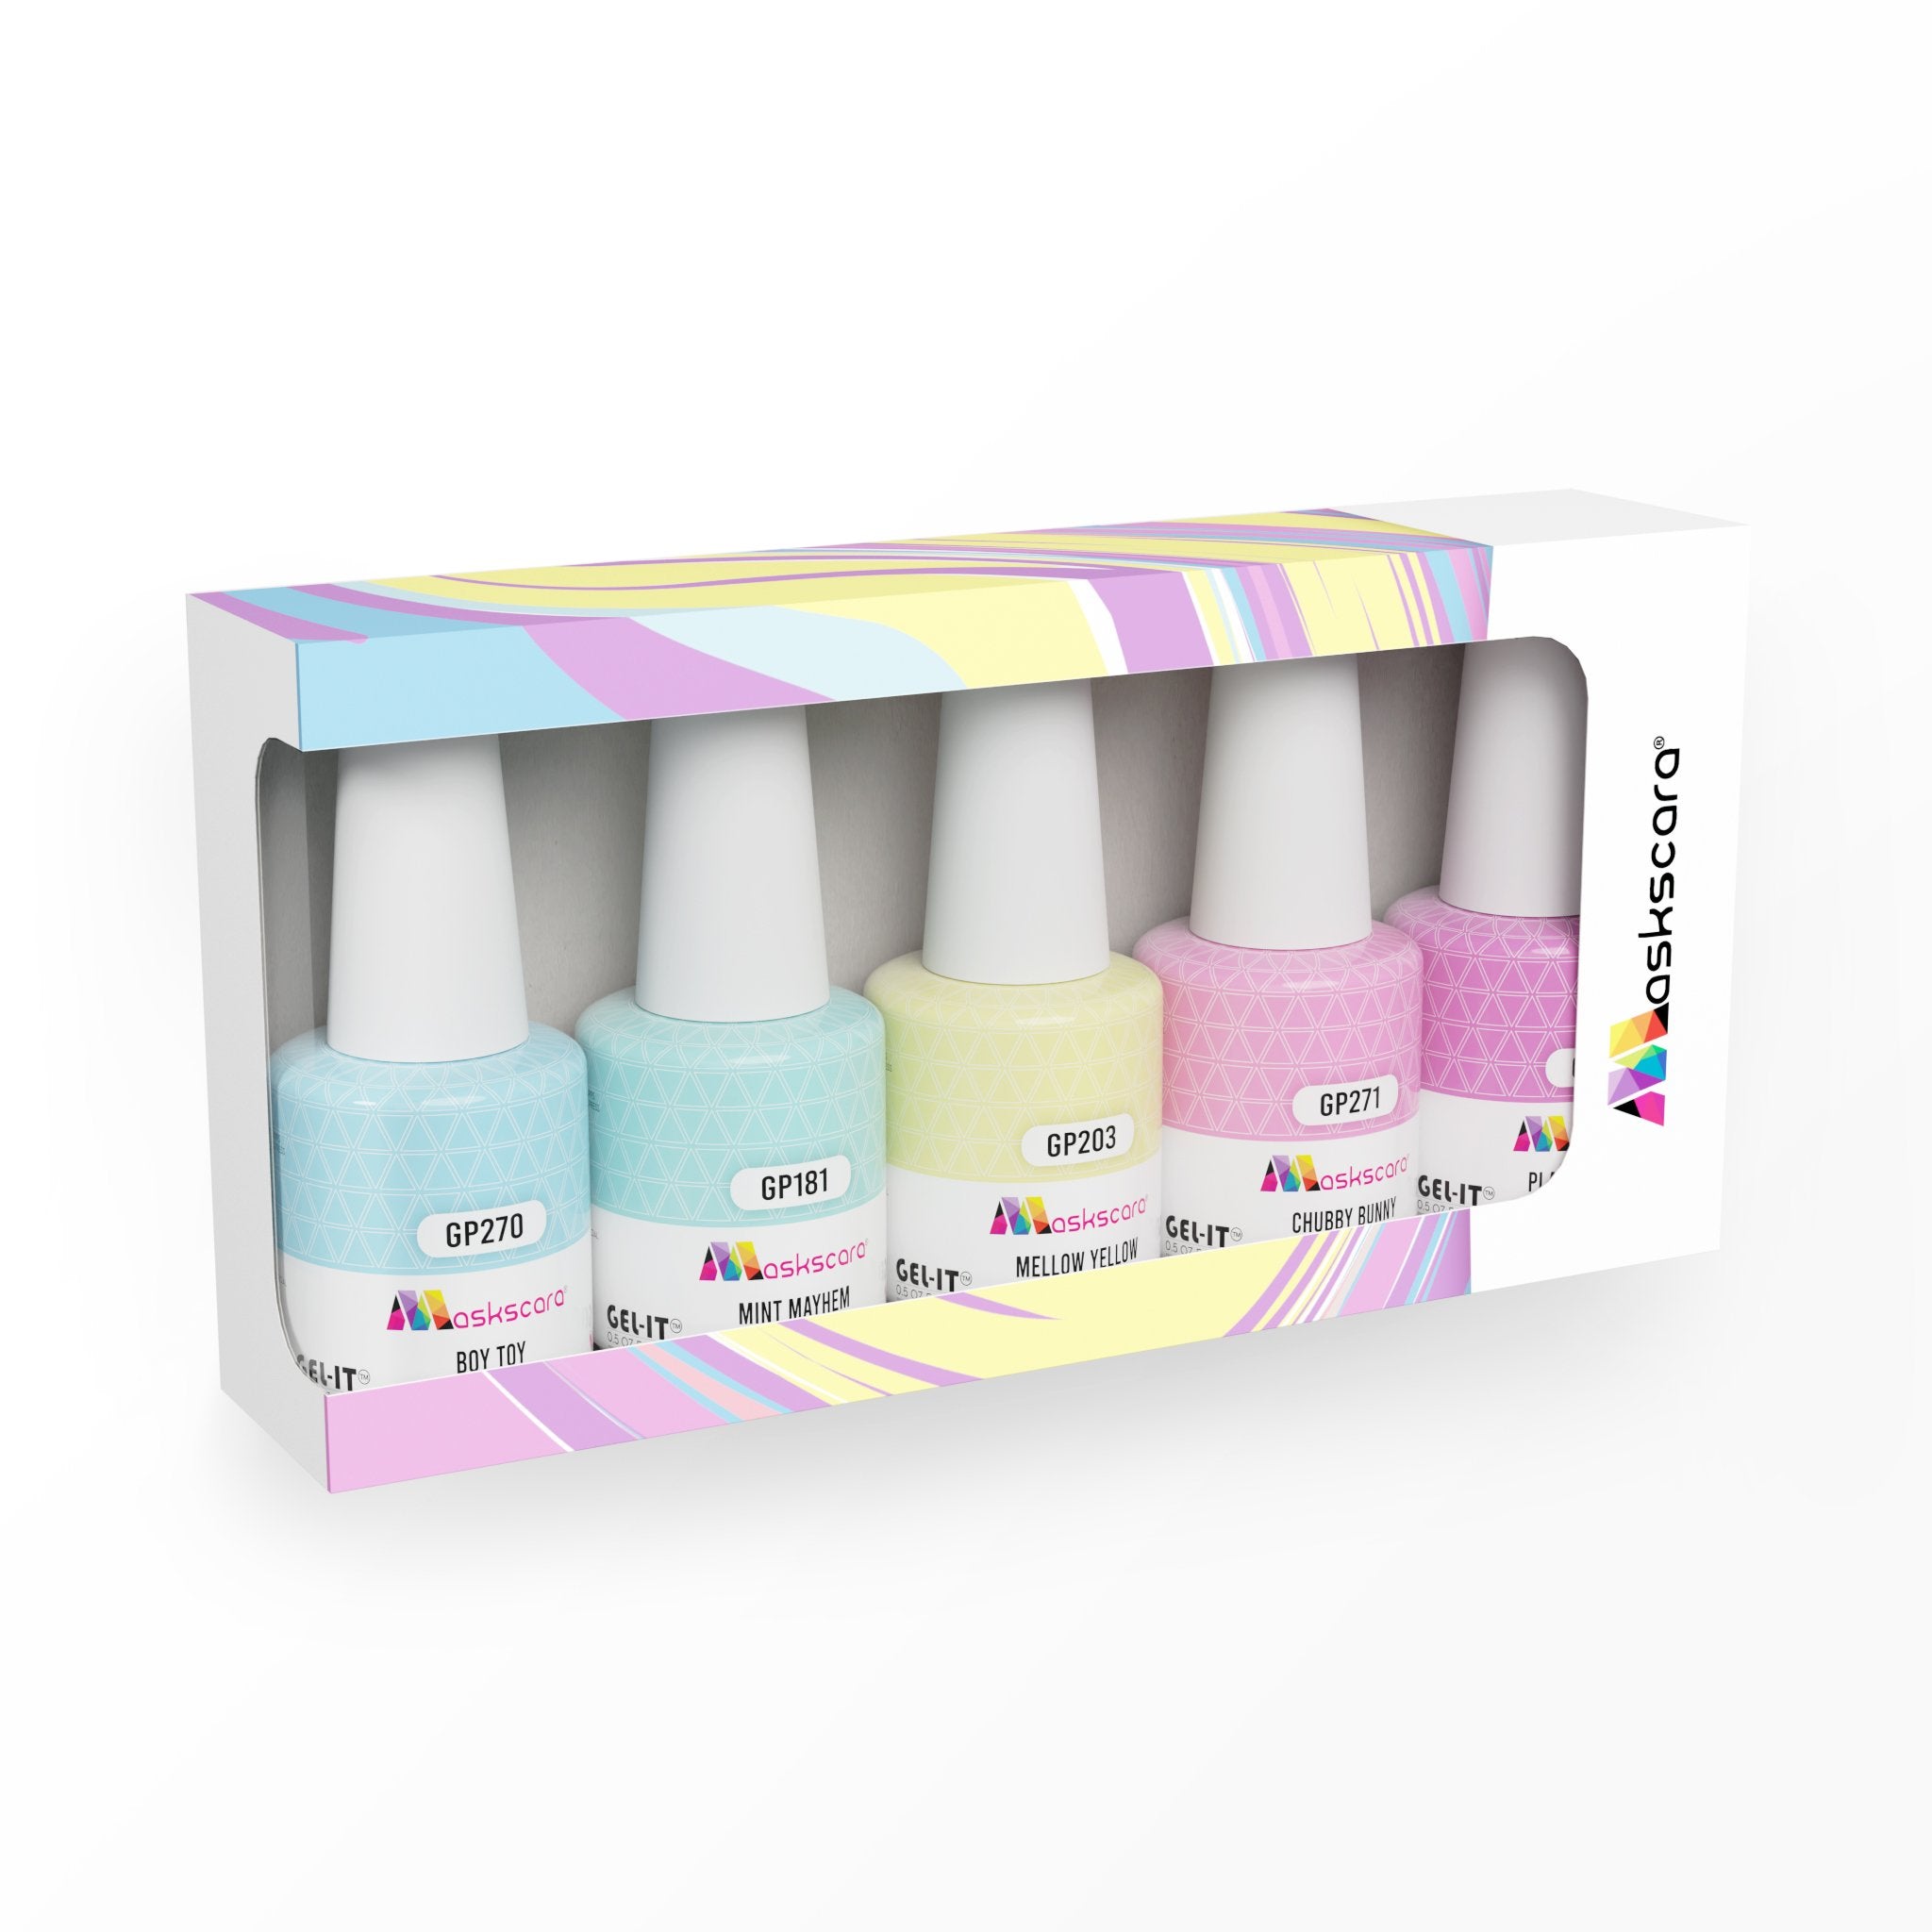 <img scr = “Maskscara Gel-It 5 Pack Pastel Utopia Kit.jpg” alt = “Pastel Gel Polish Kit by the brand Maskscara ”>